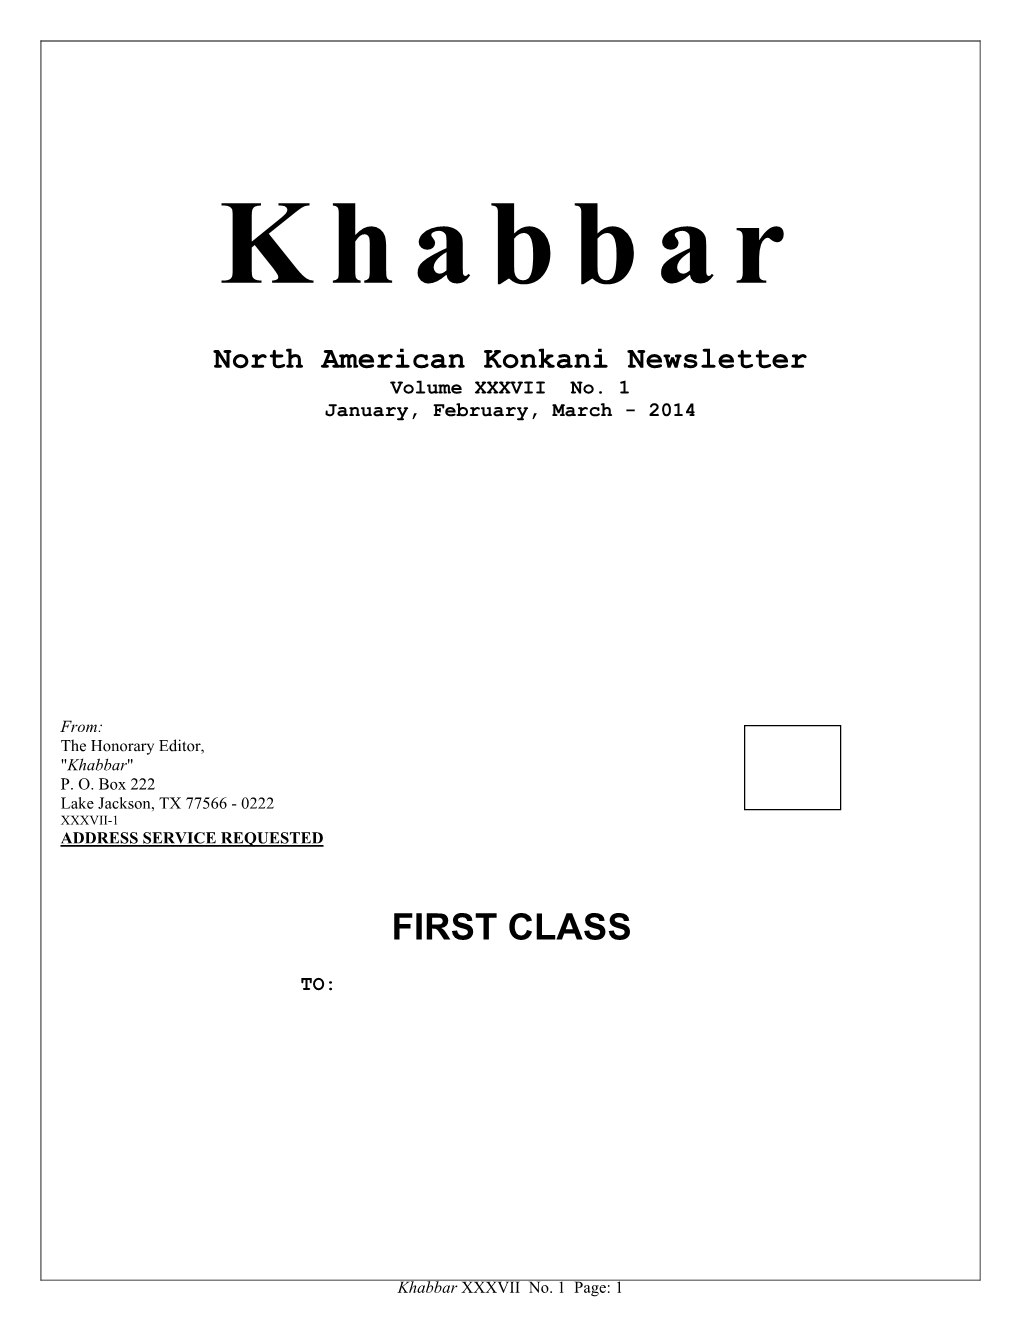 Khabbar Vol. XXXVII No. 1 (January, February, March